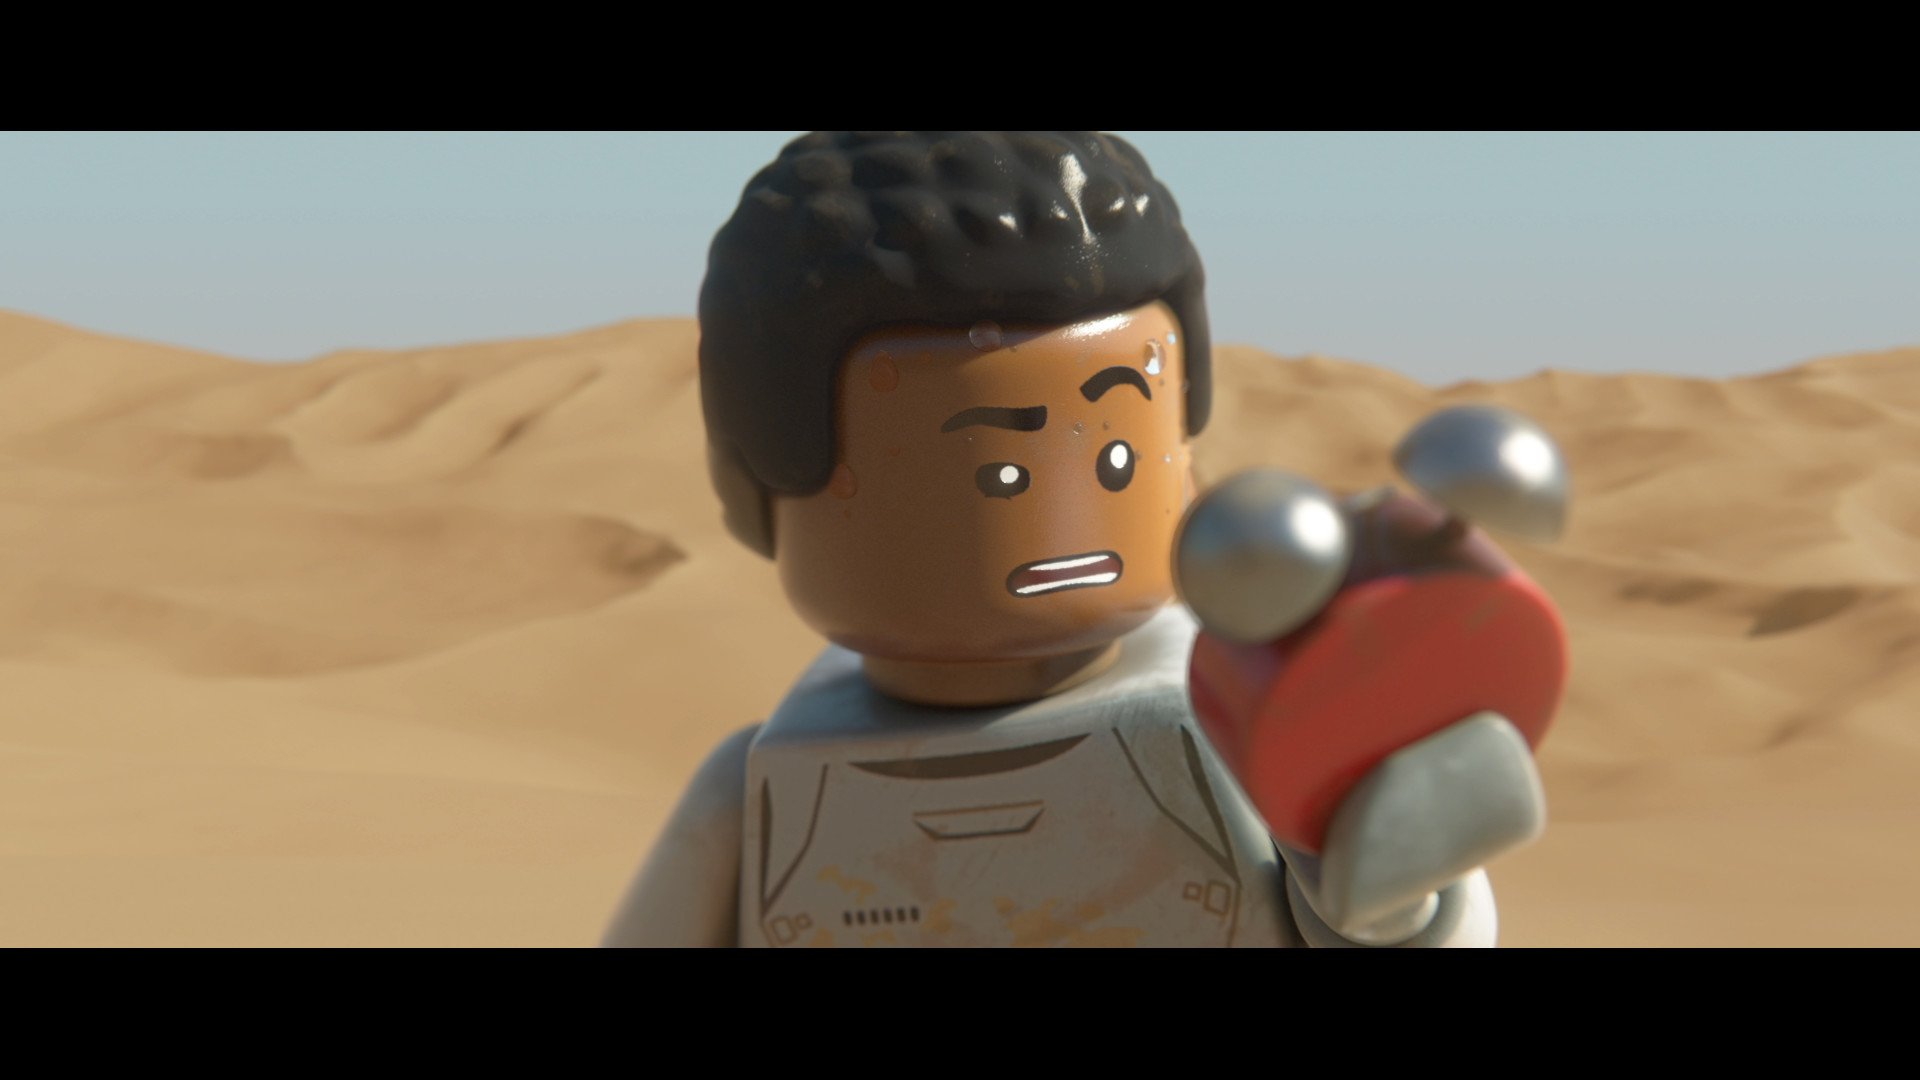 LEGO Star Wars The Force Awakens Season Pass 9